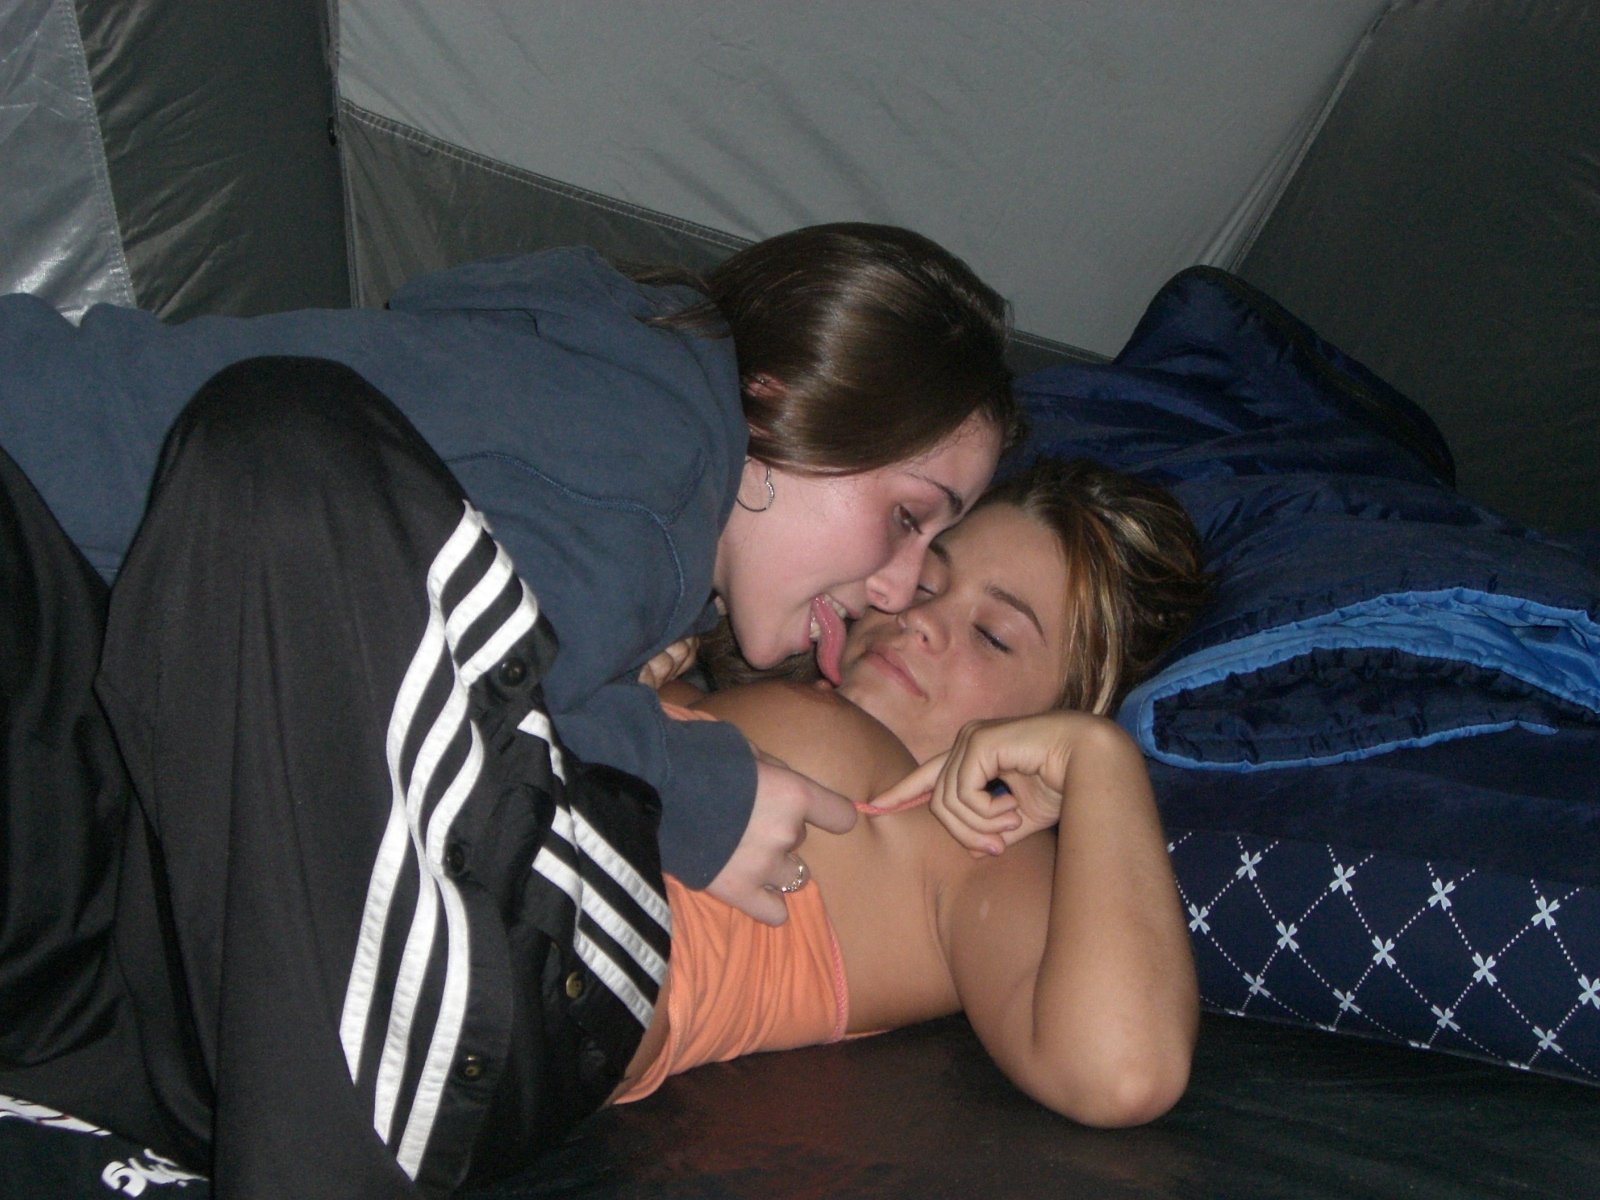 Lesbians go camping